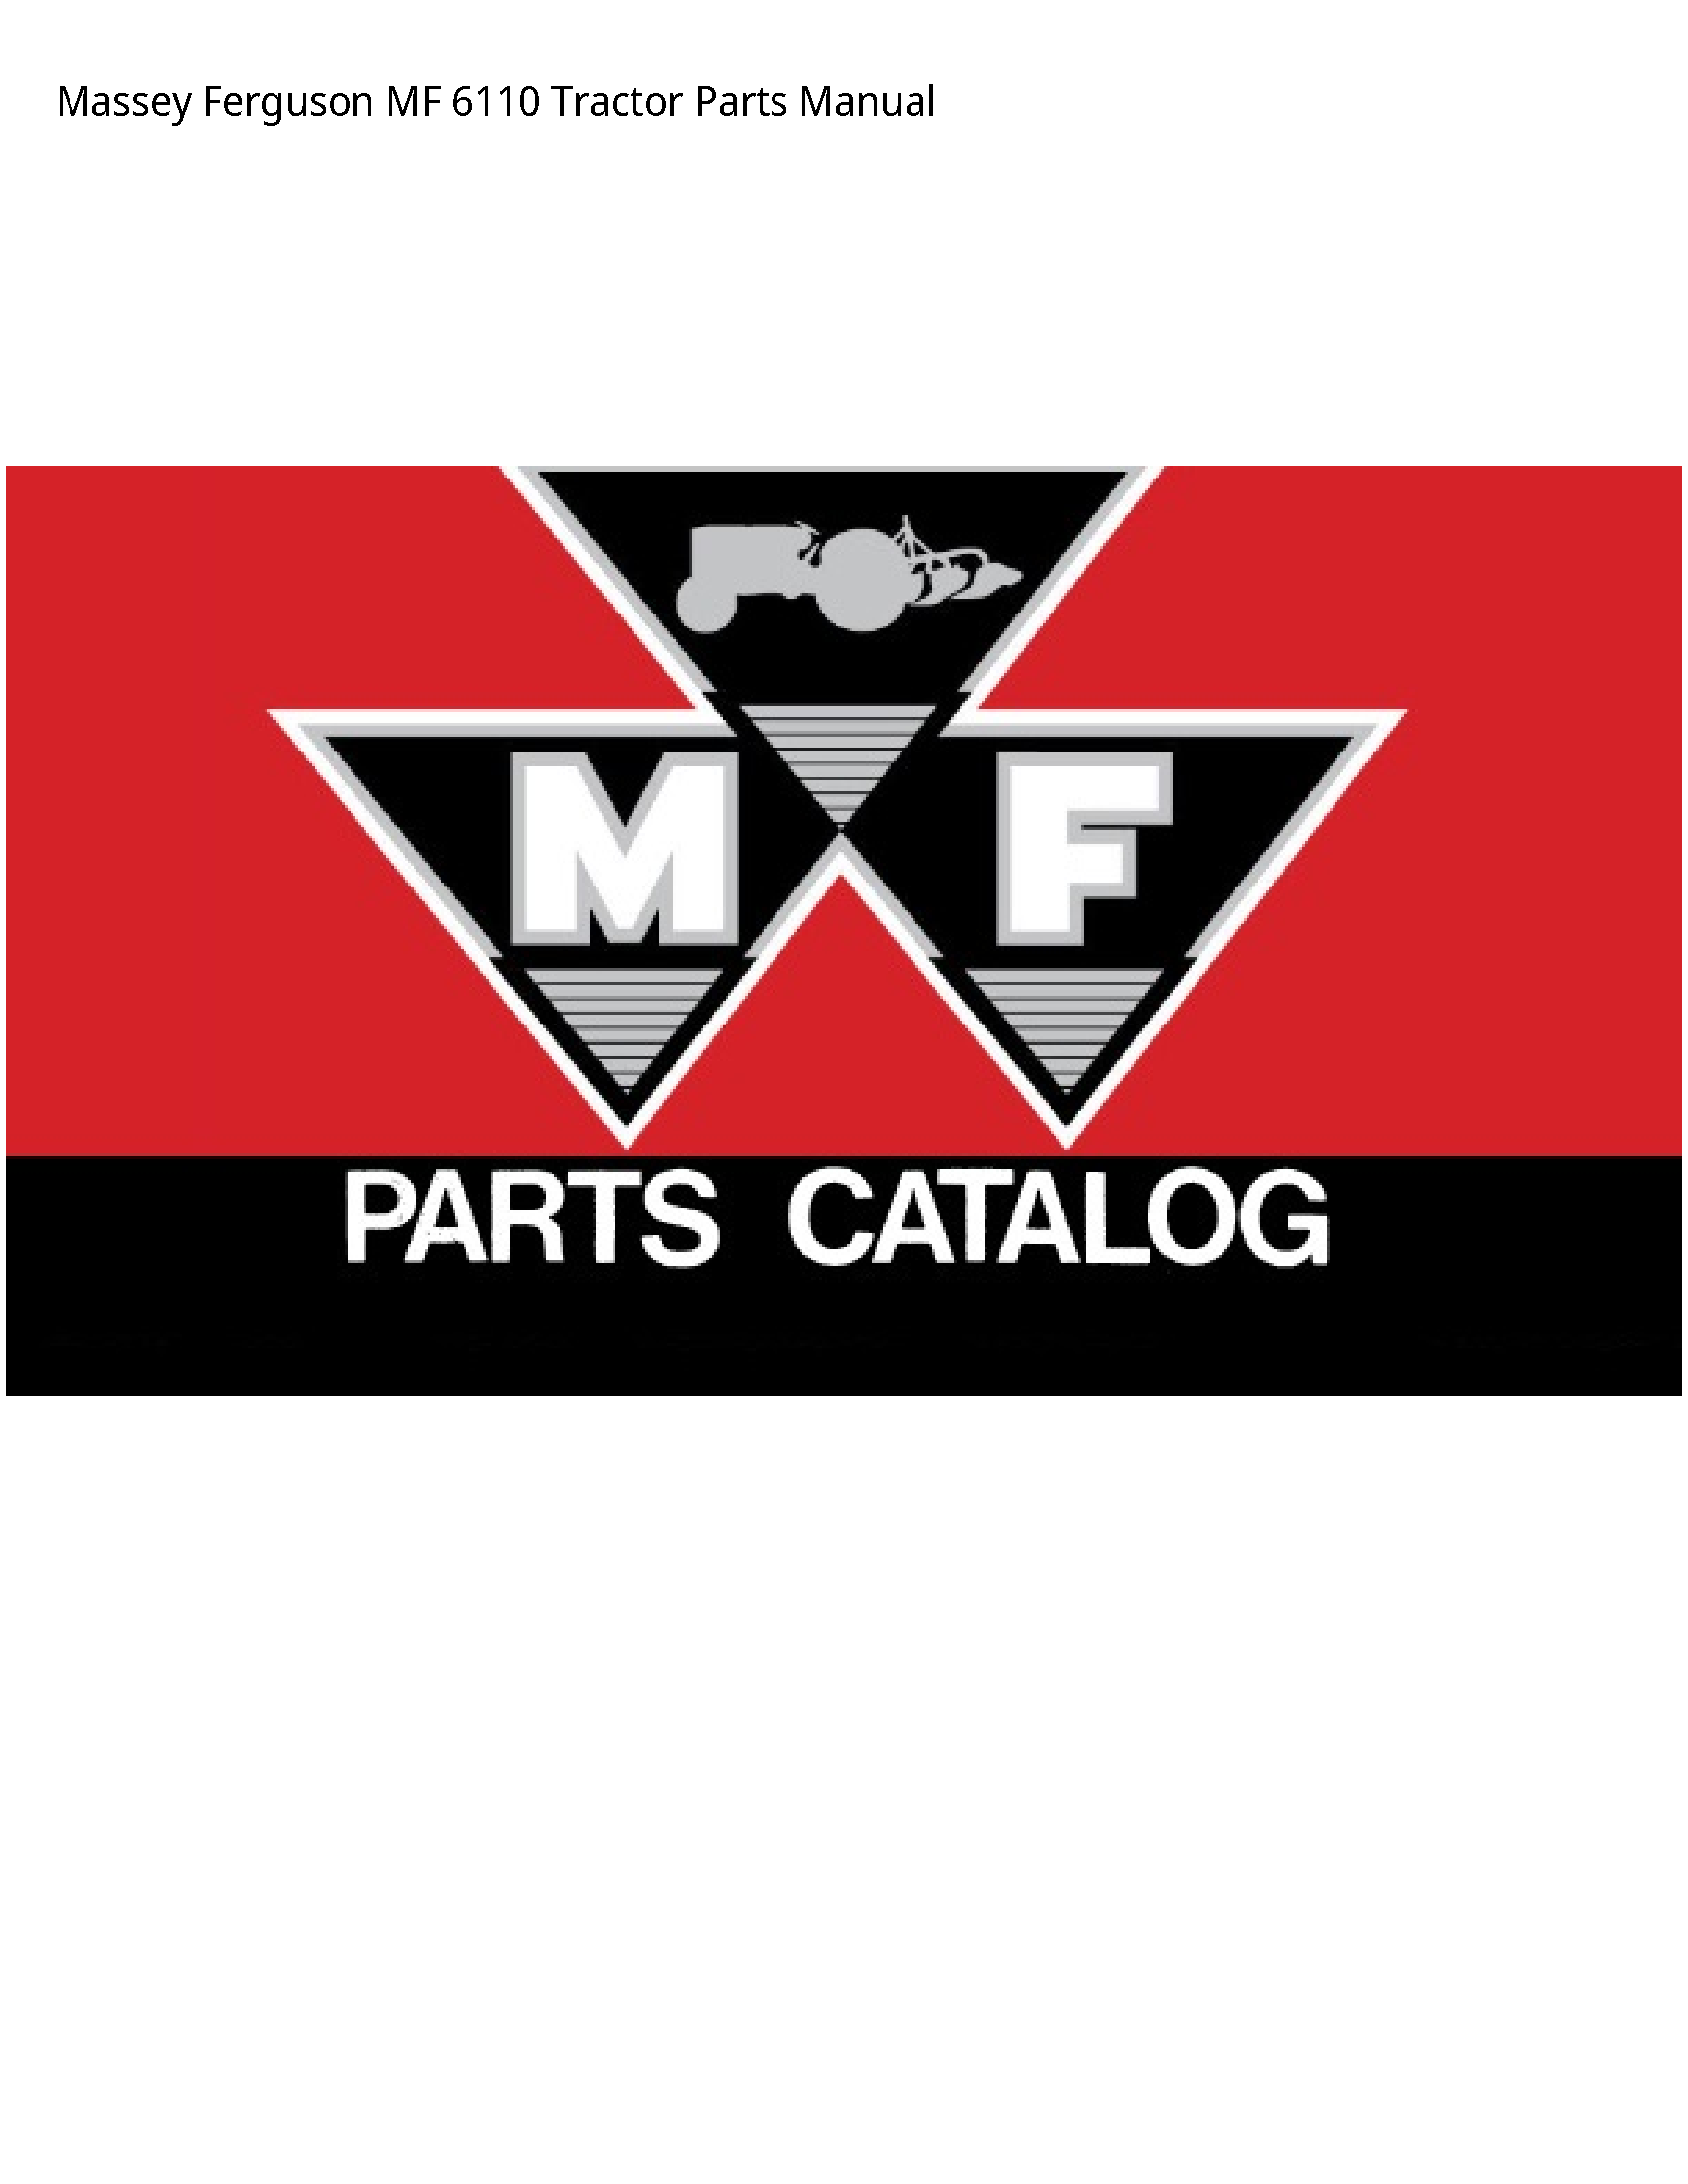 Massey Ferguson 6110 MF Tractor Parts manual